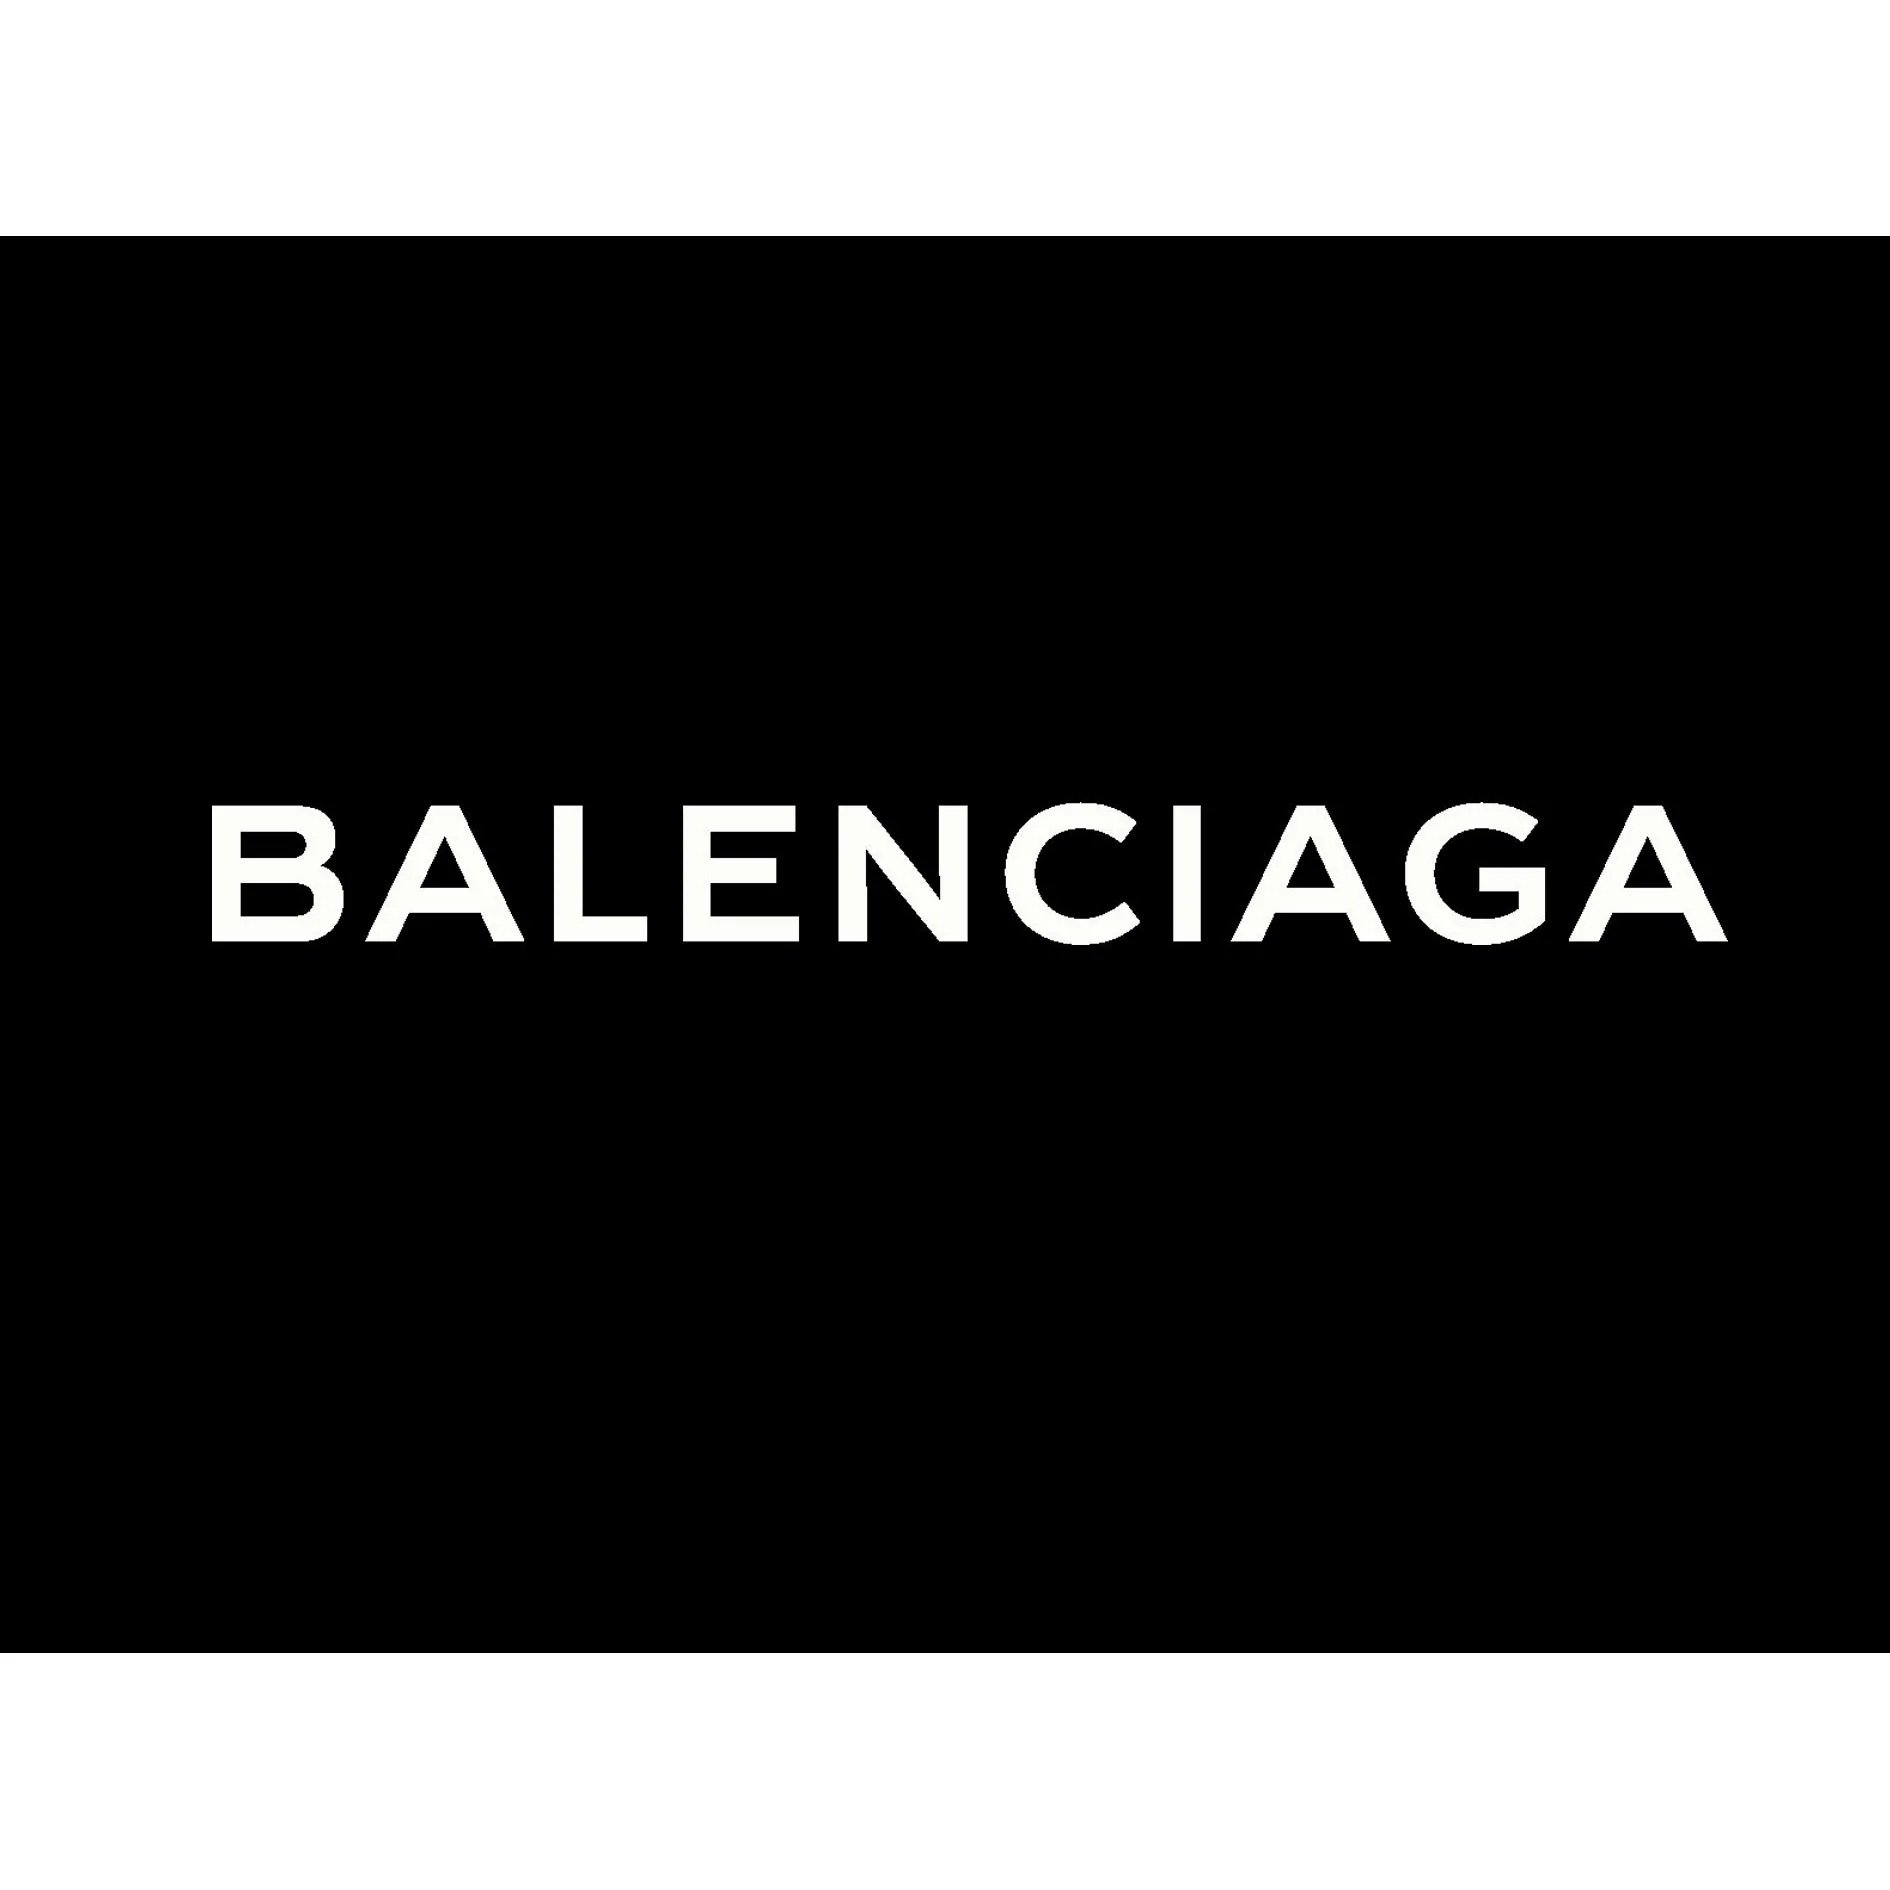 Balenciaga Accused of Promoting 'Child Porn' Content in Campaign